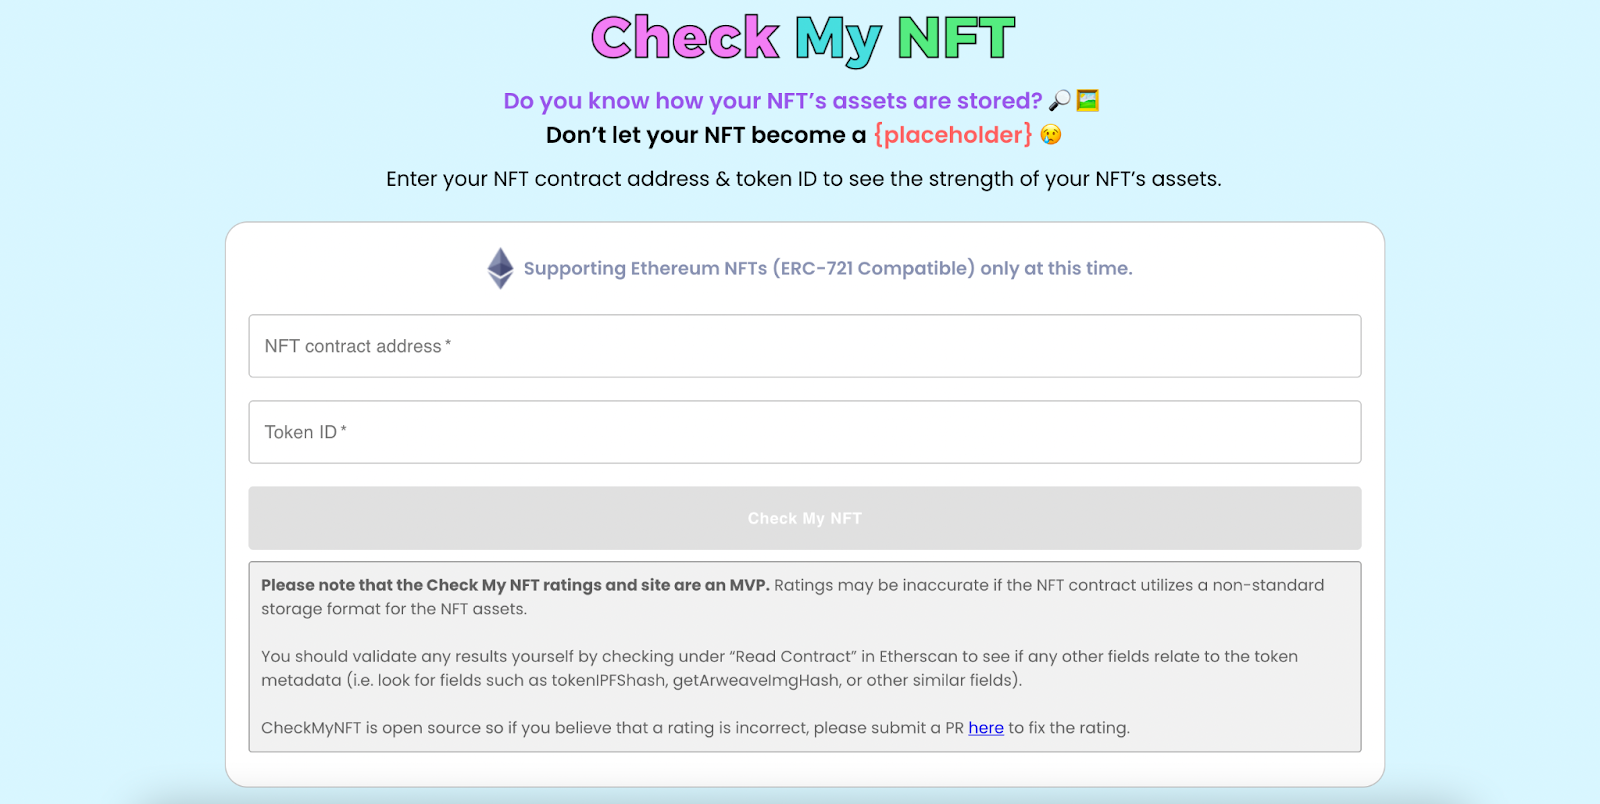 Check My NFT homepage